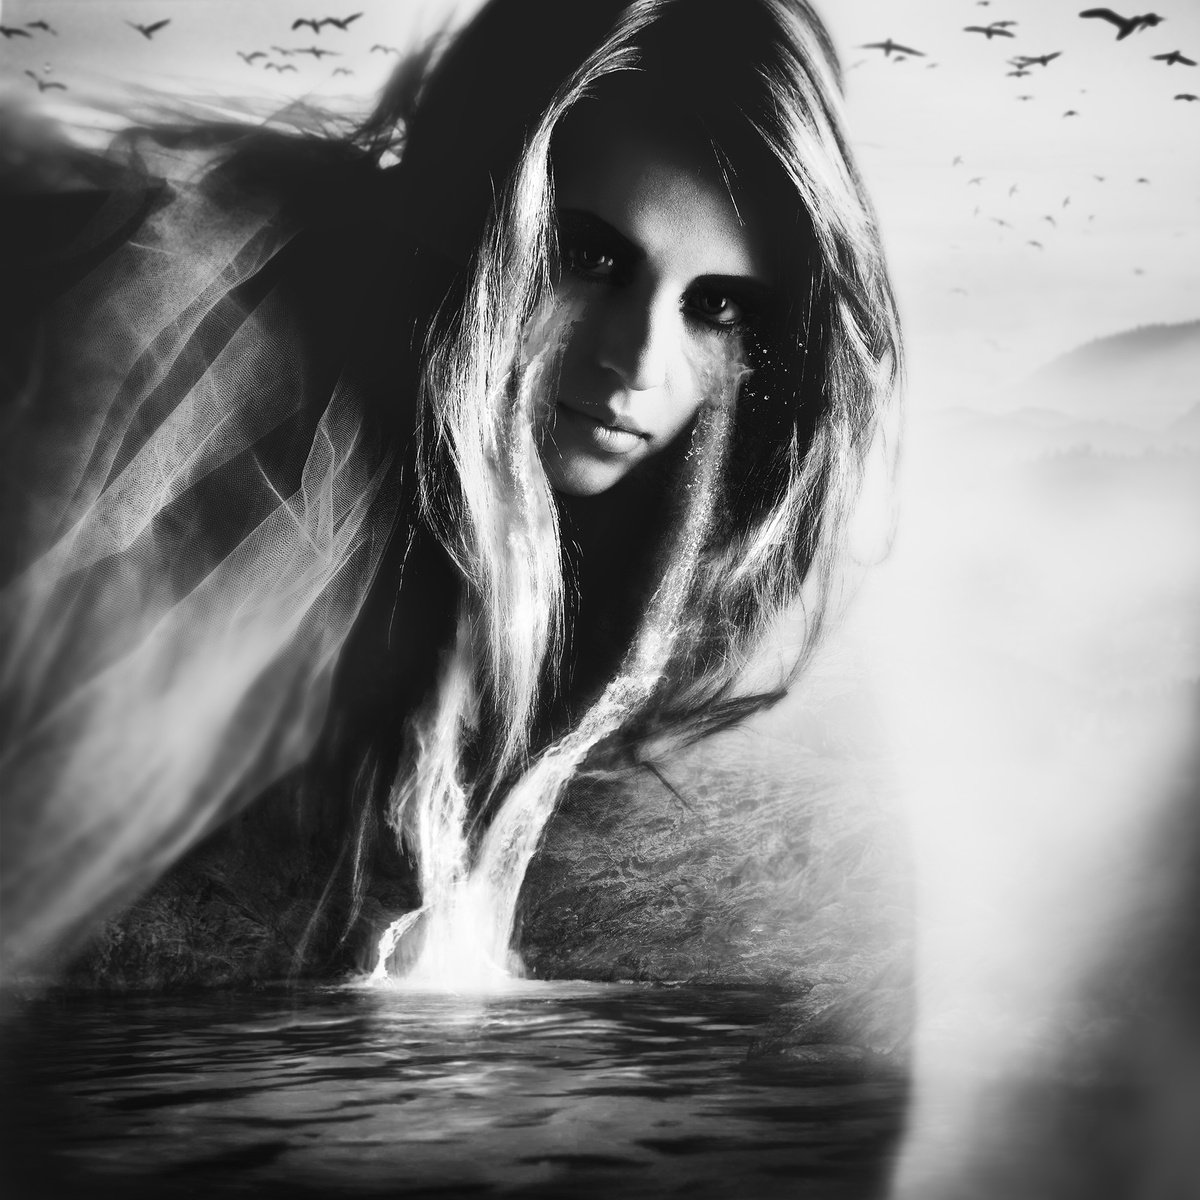 Waterfalls of tears by Yuliia Savenko